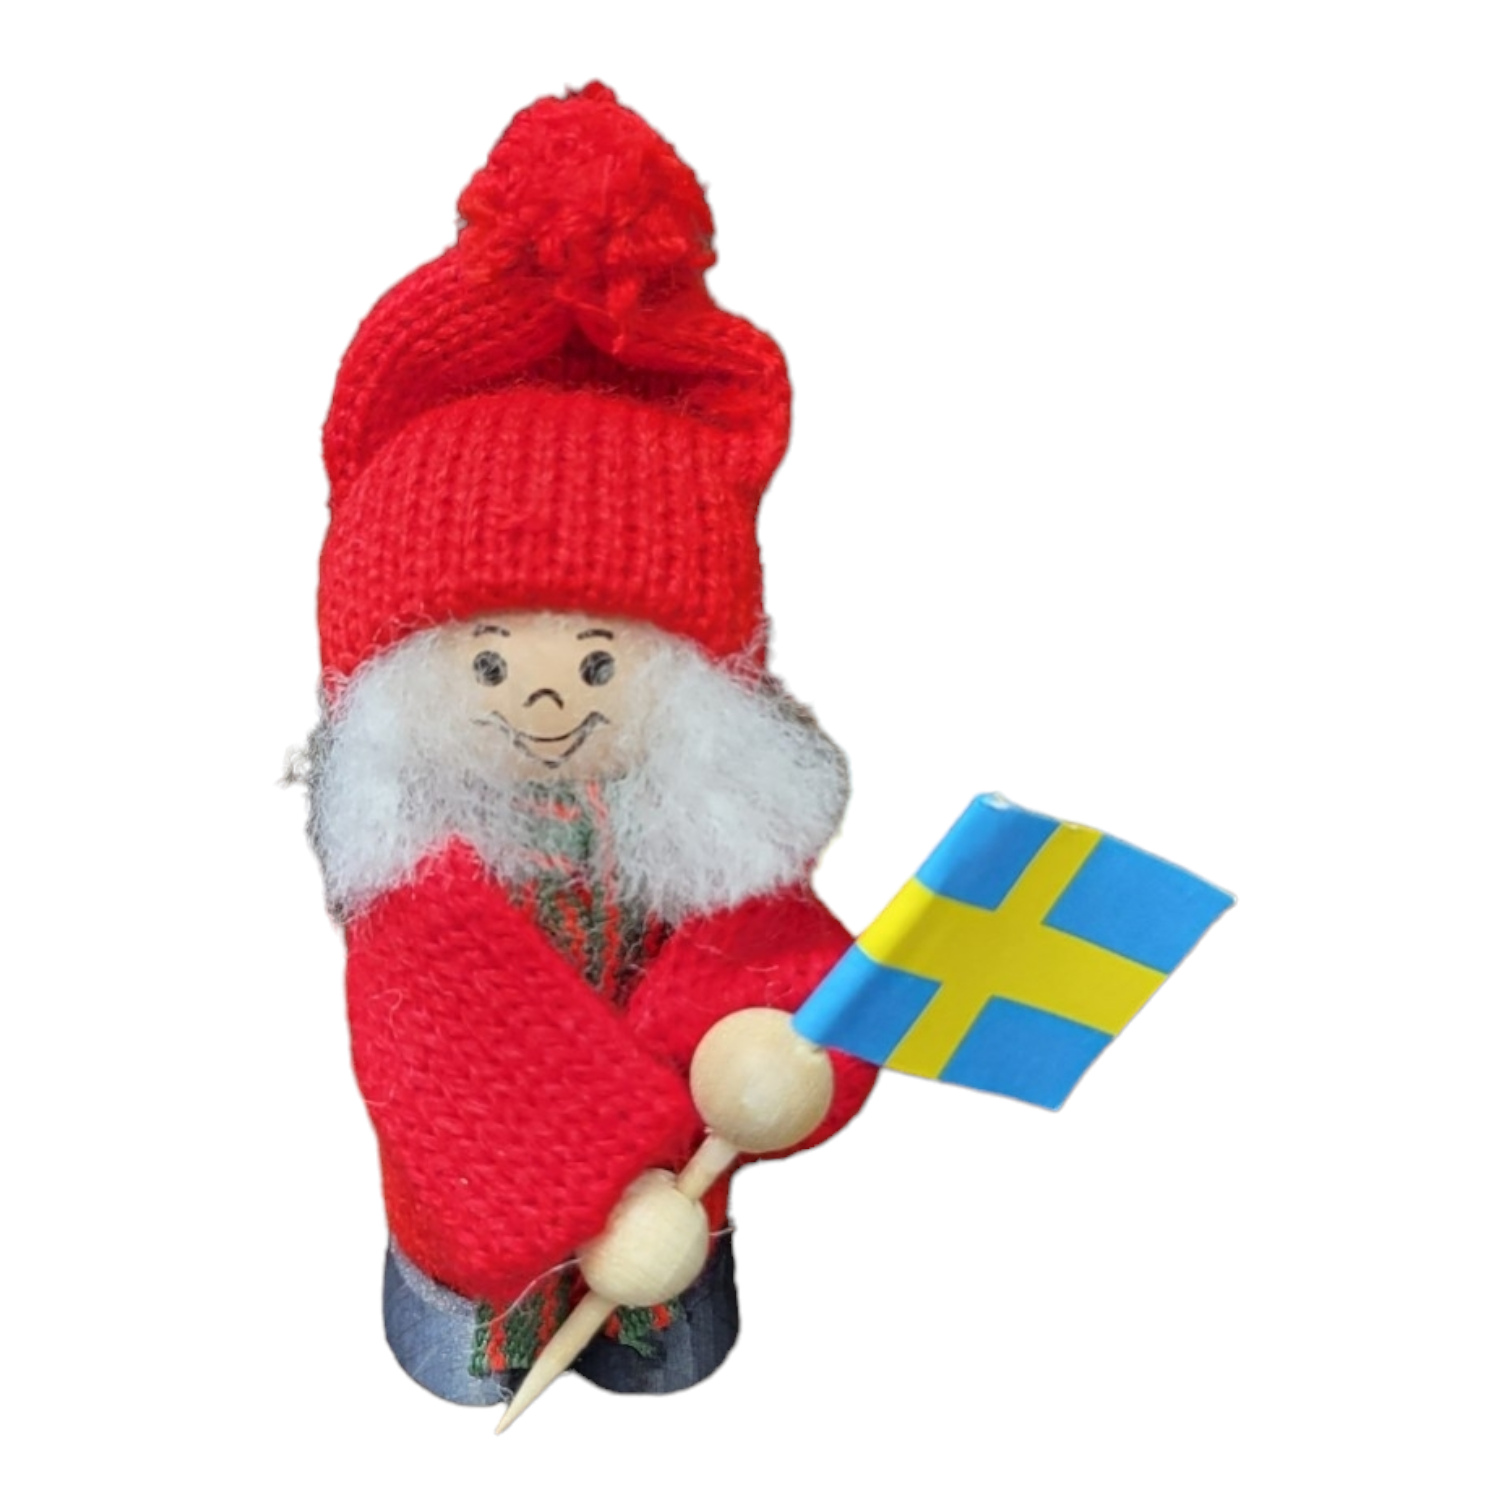 Figurine: Tomte with Swedish Flag, Boy or Girl